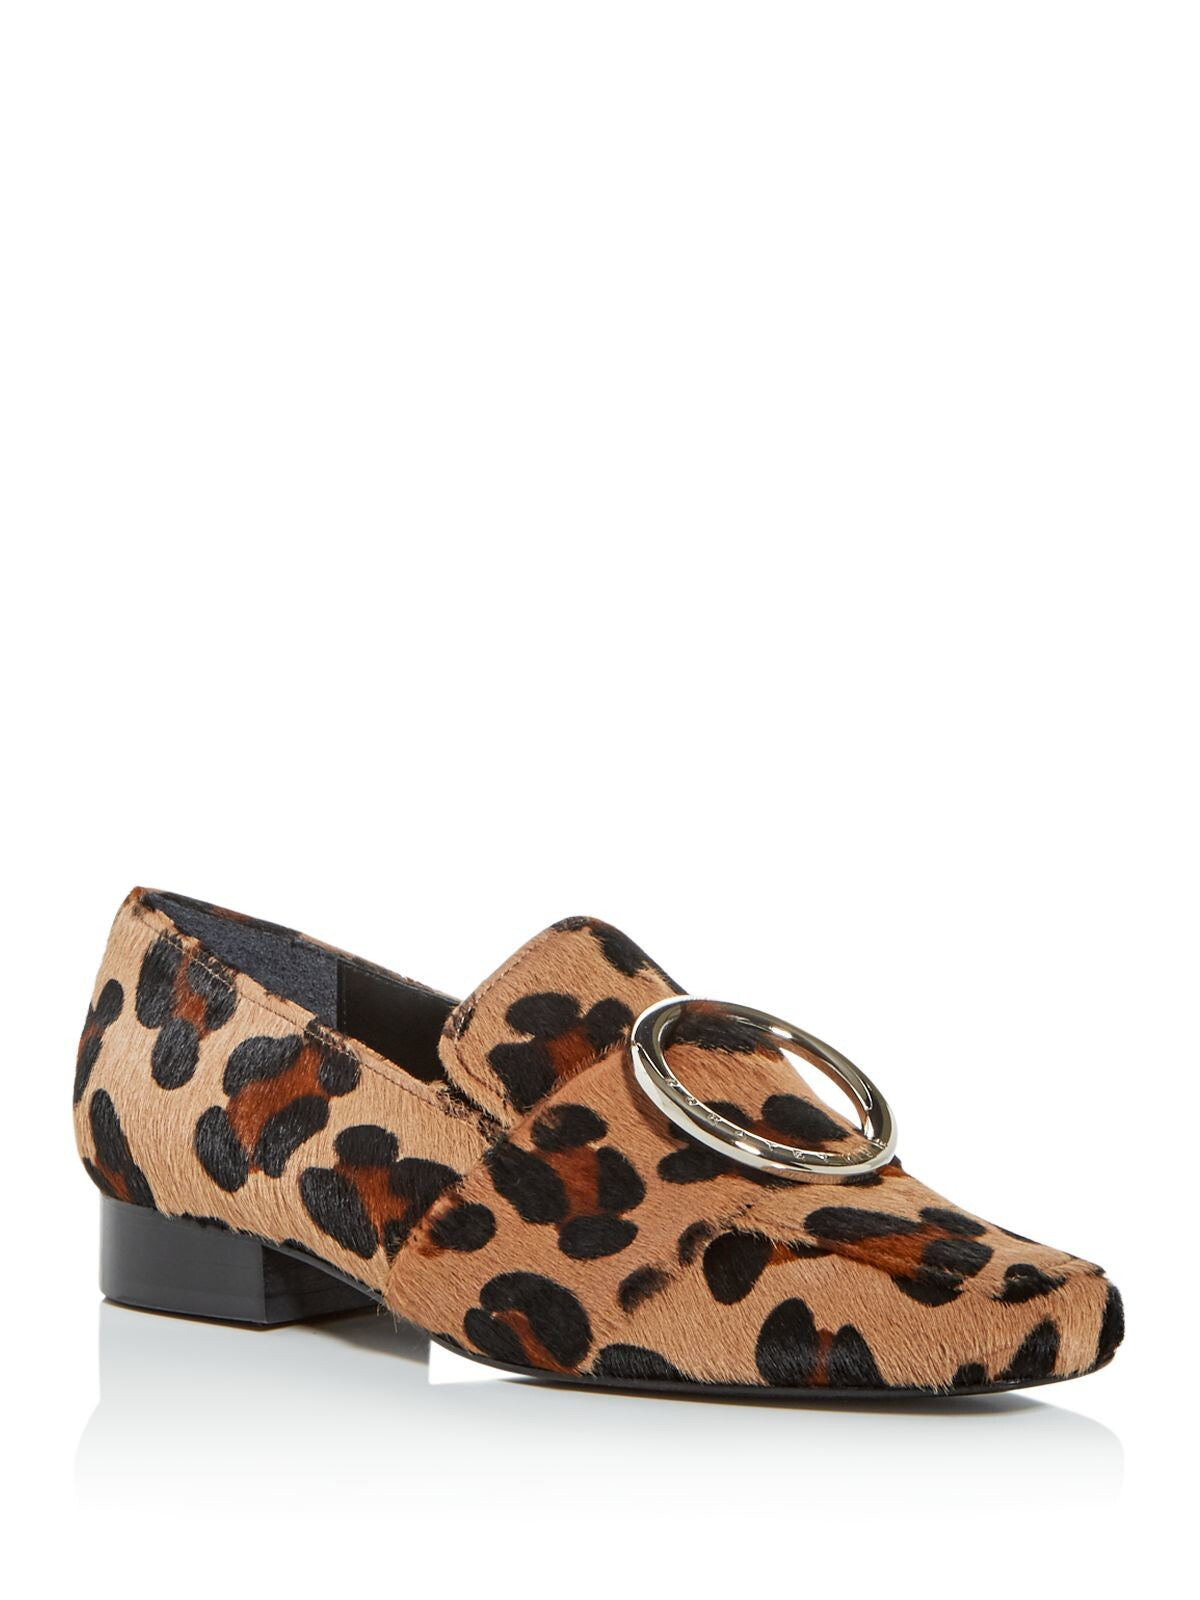 DORATEYMUR Womens Beige Leopard Print Buckle Accent Comfort Harput Square Toe Block Heel Slip On Leather Loafers Shoes 38